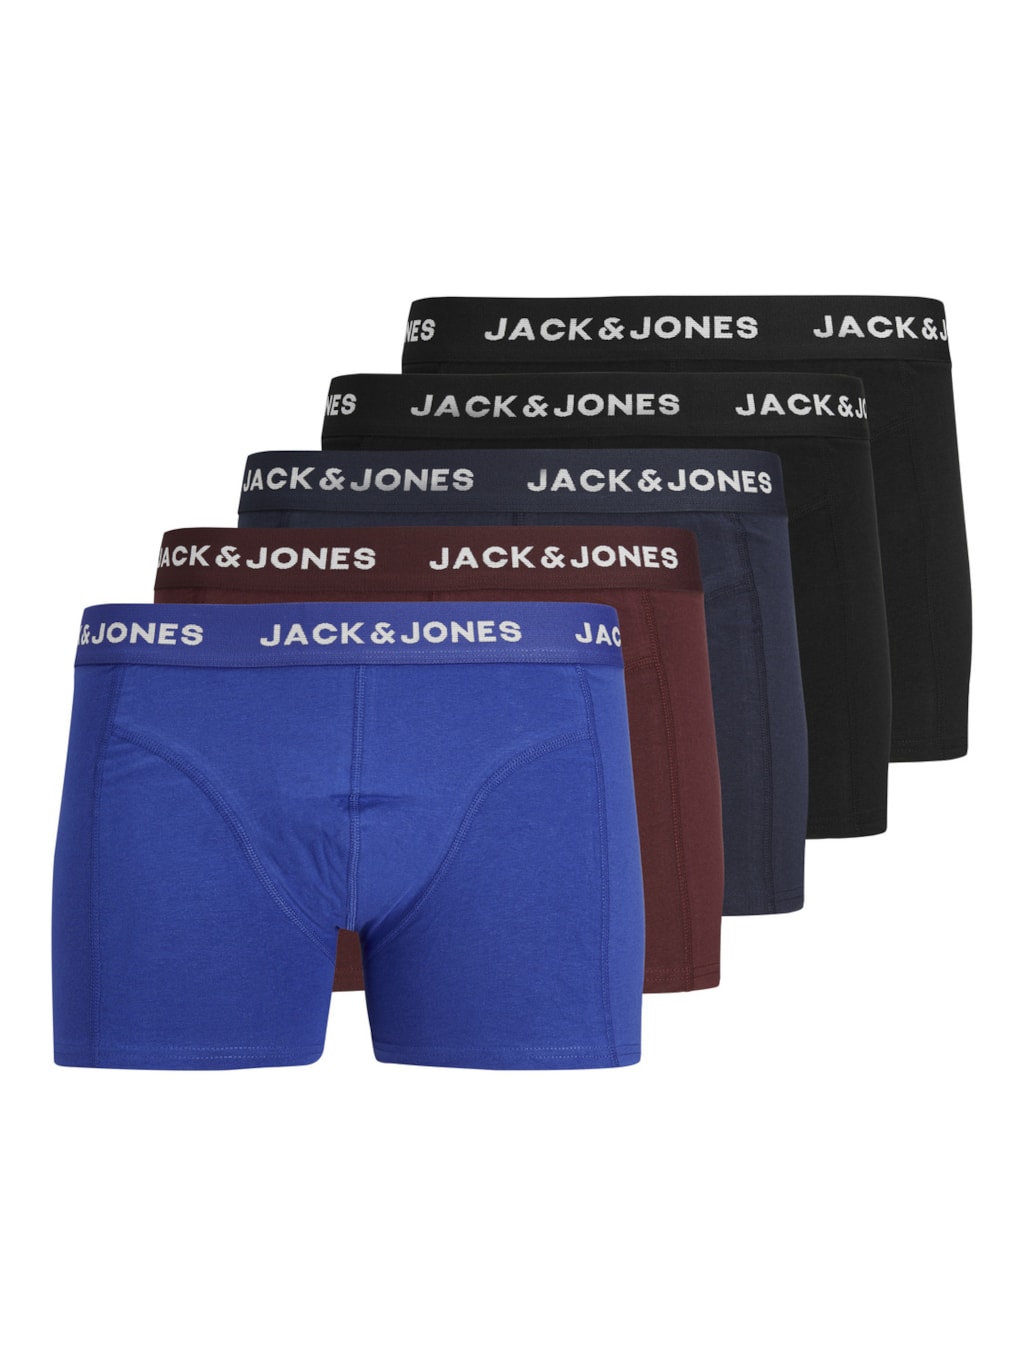 Jack & Jones Boxershorts JACBLACK FRIDAY Trunks 5-pack Zwart / Blauw / Bordeaux -L